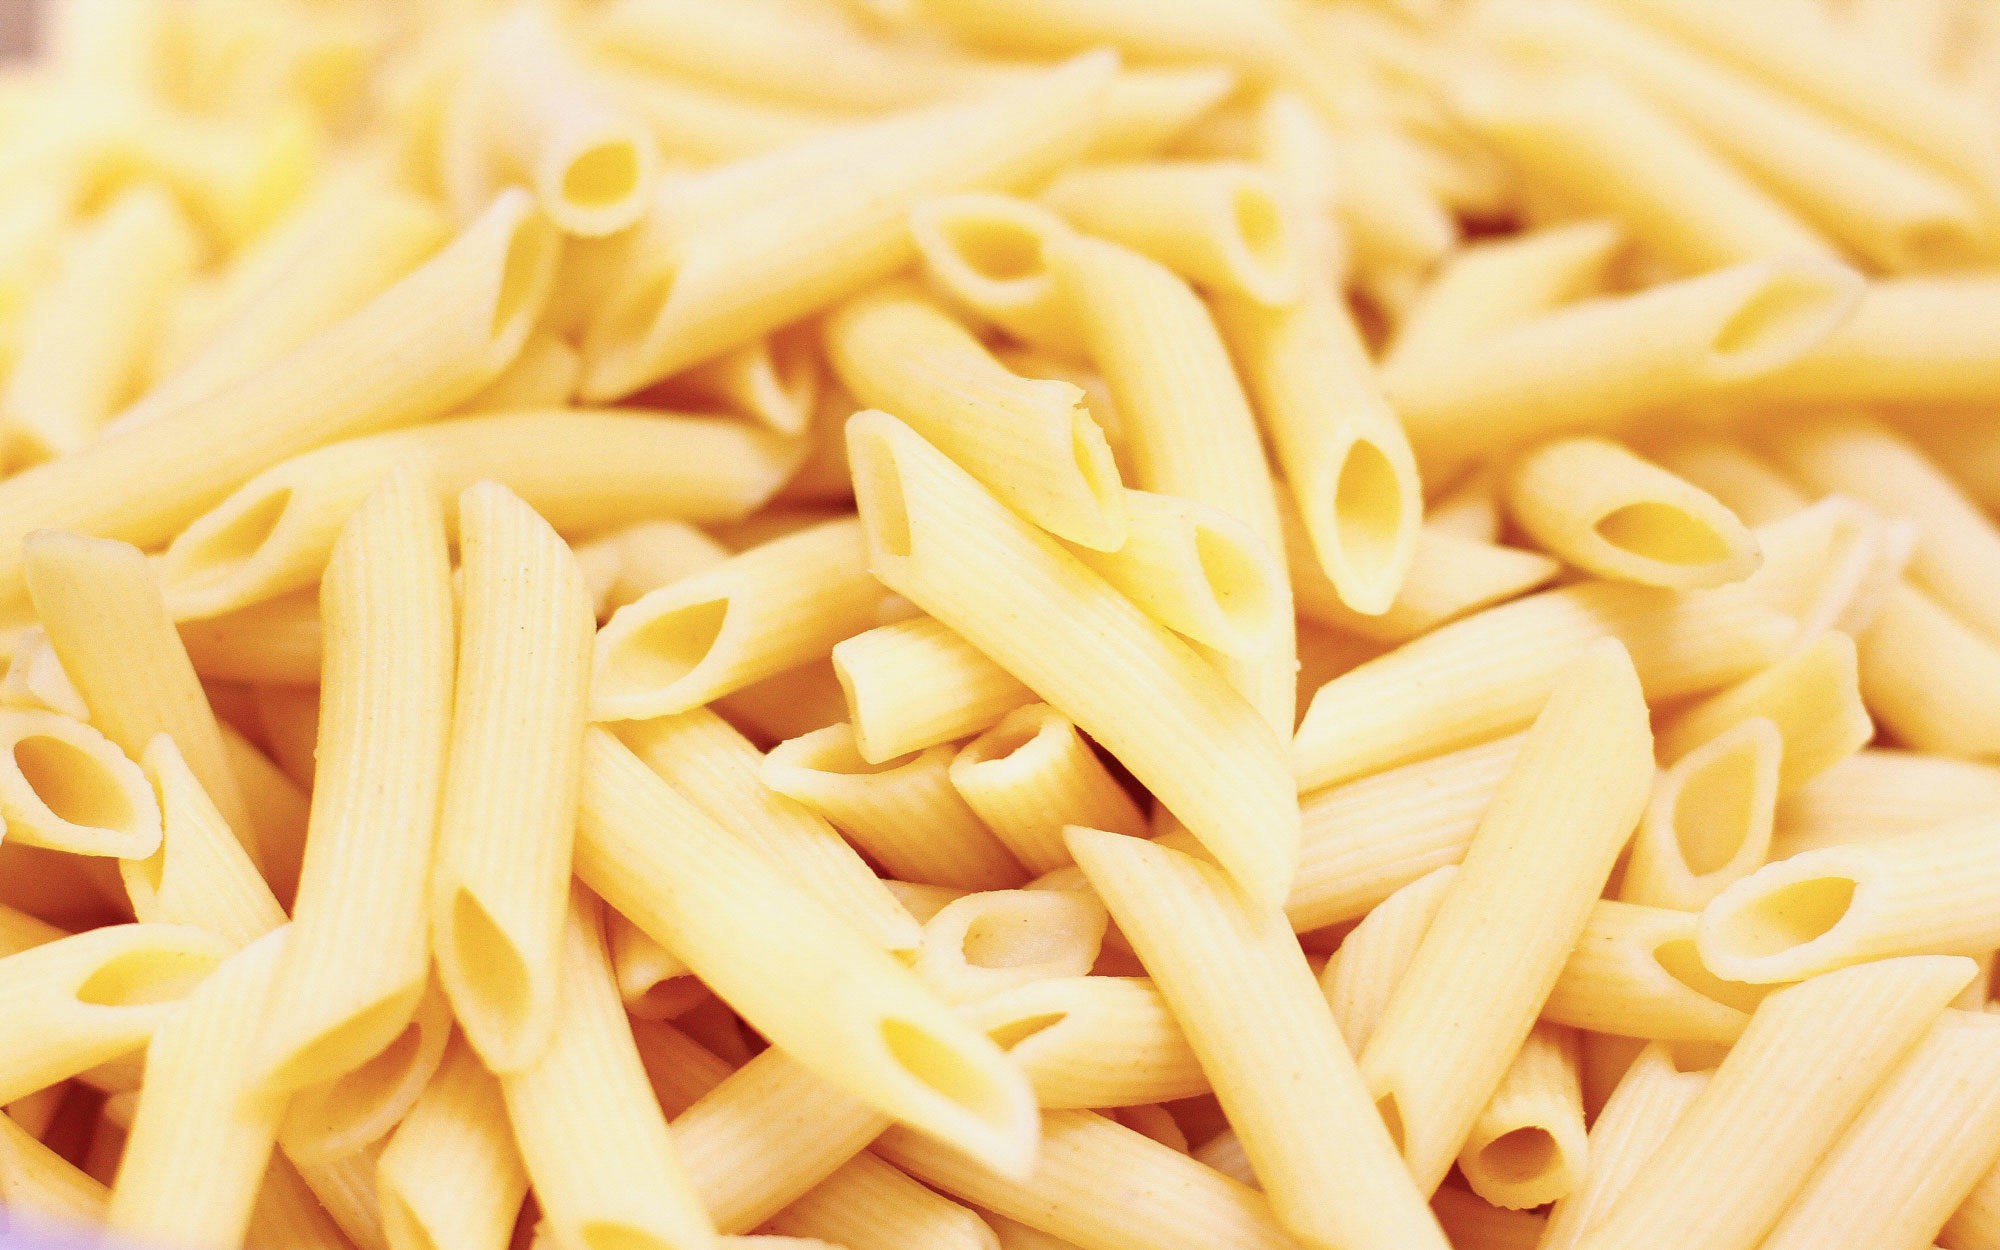 Conference healthy food events industry trend pasta credit marnee wohlfert